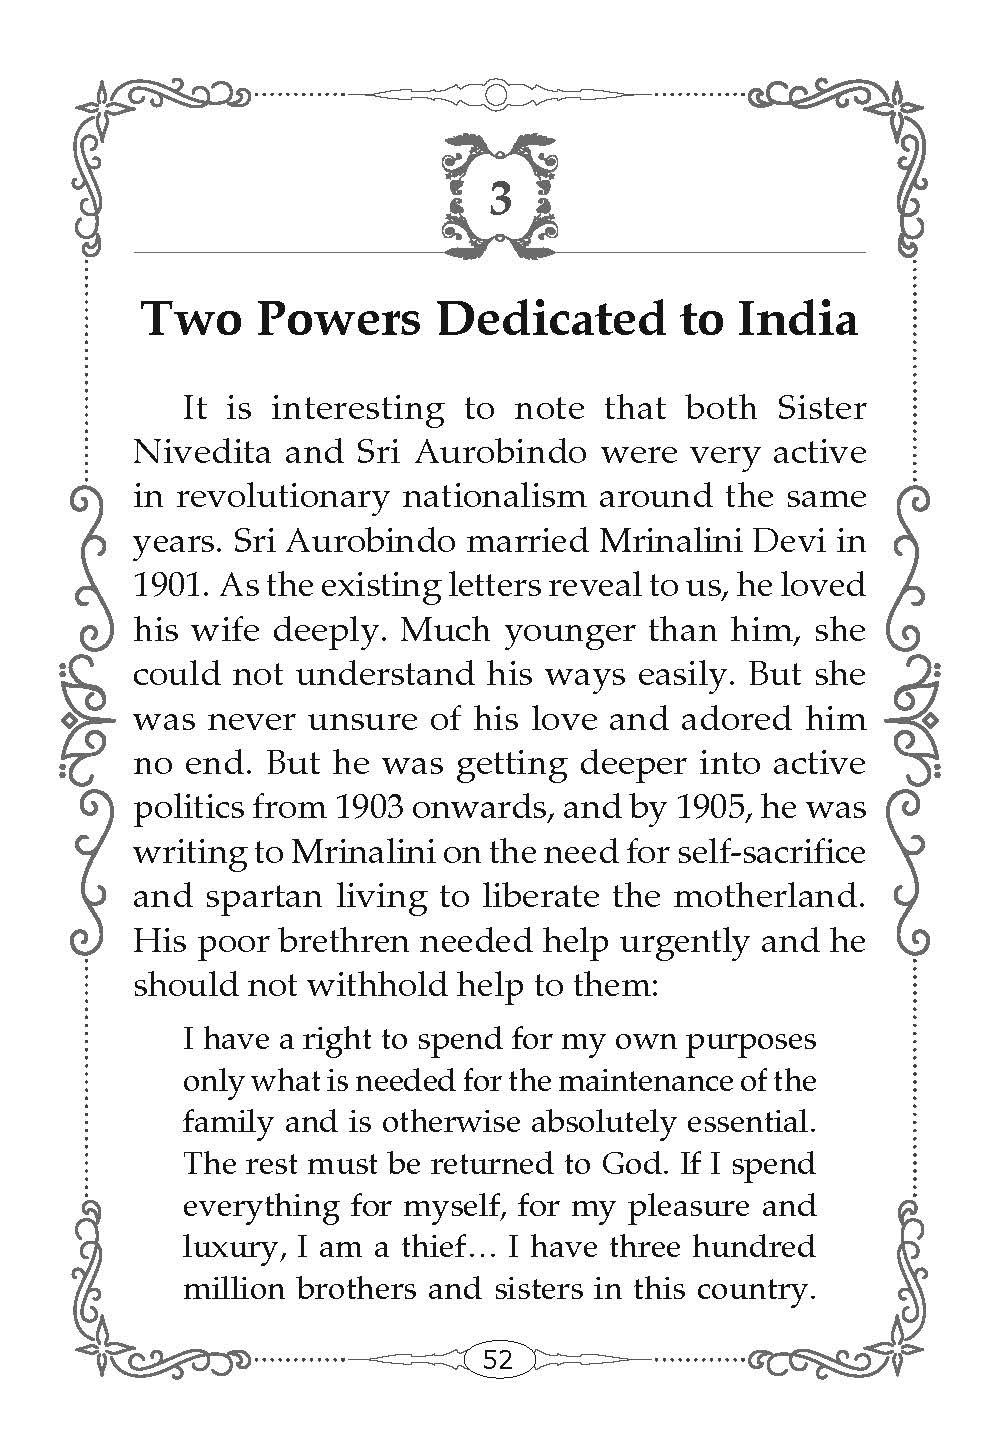 sister nivedita our role model essay